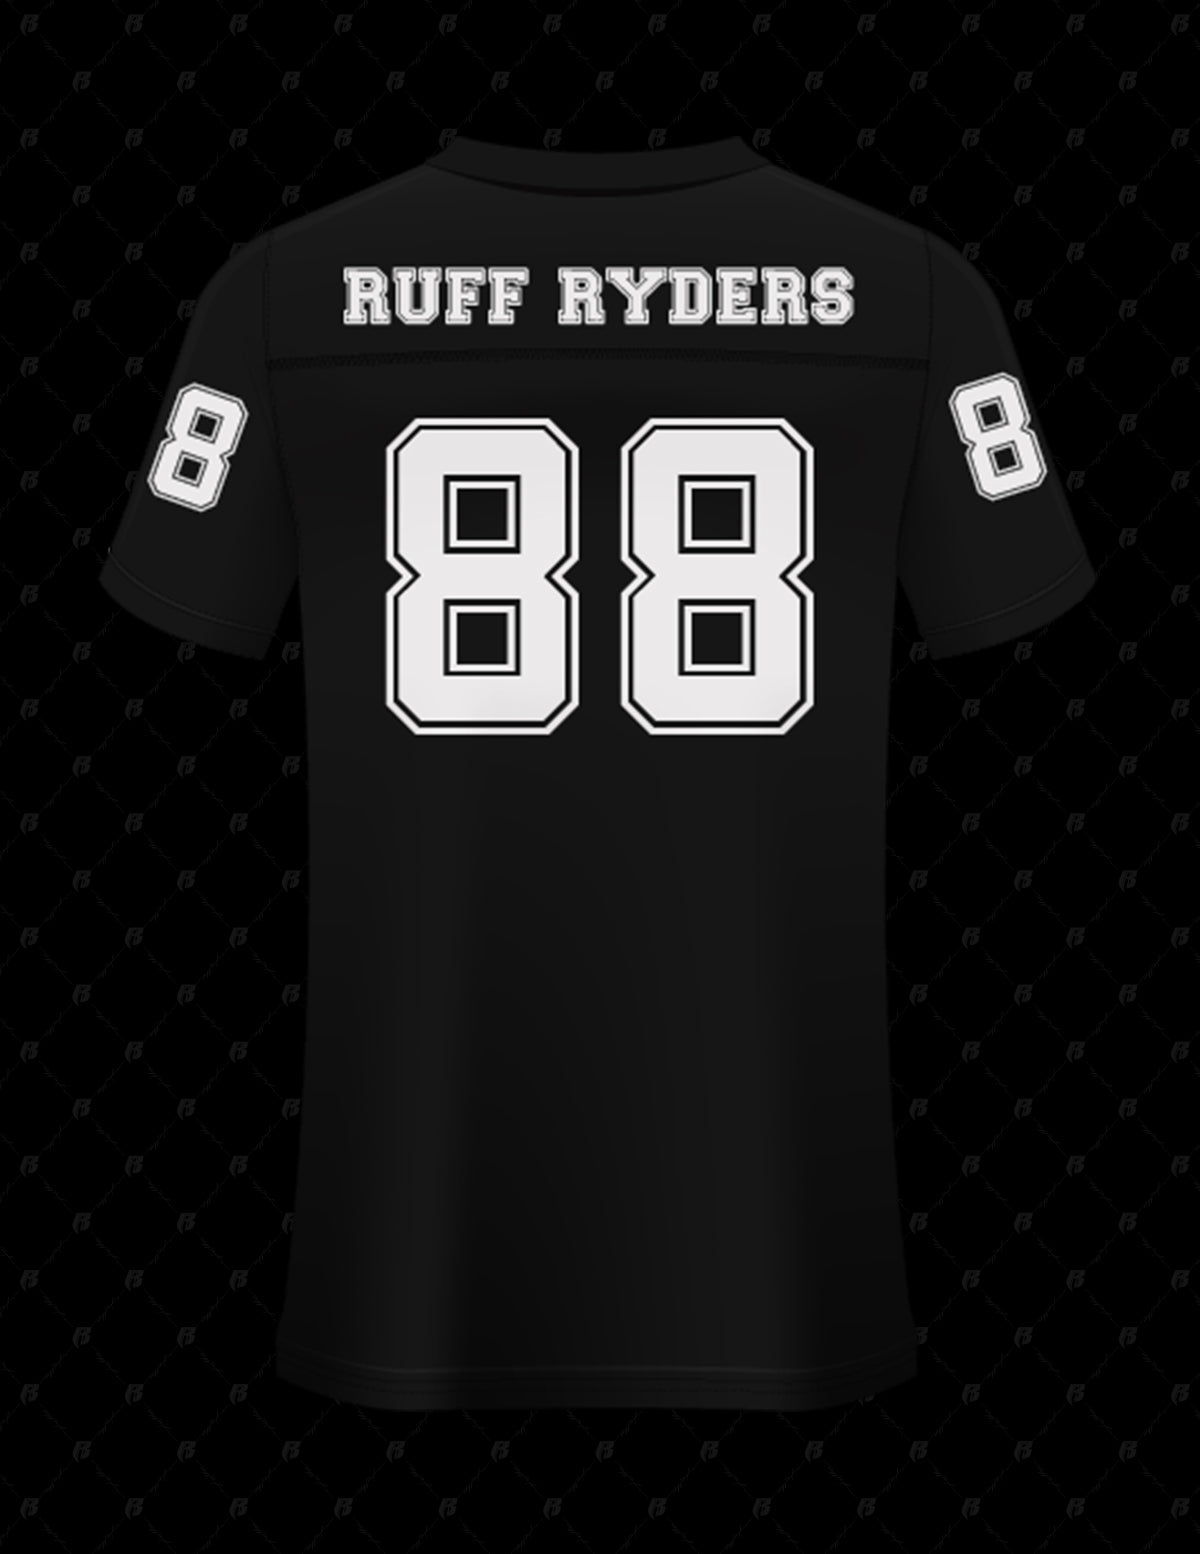 Black Ruff Ryders Reflective Football Jersey